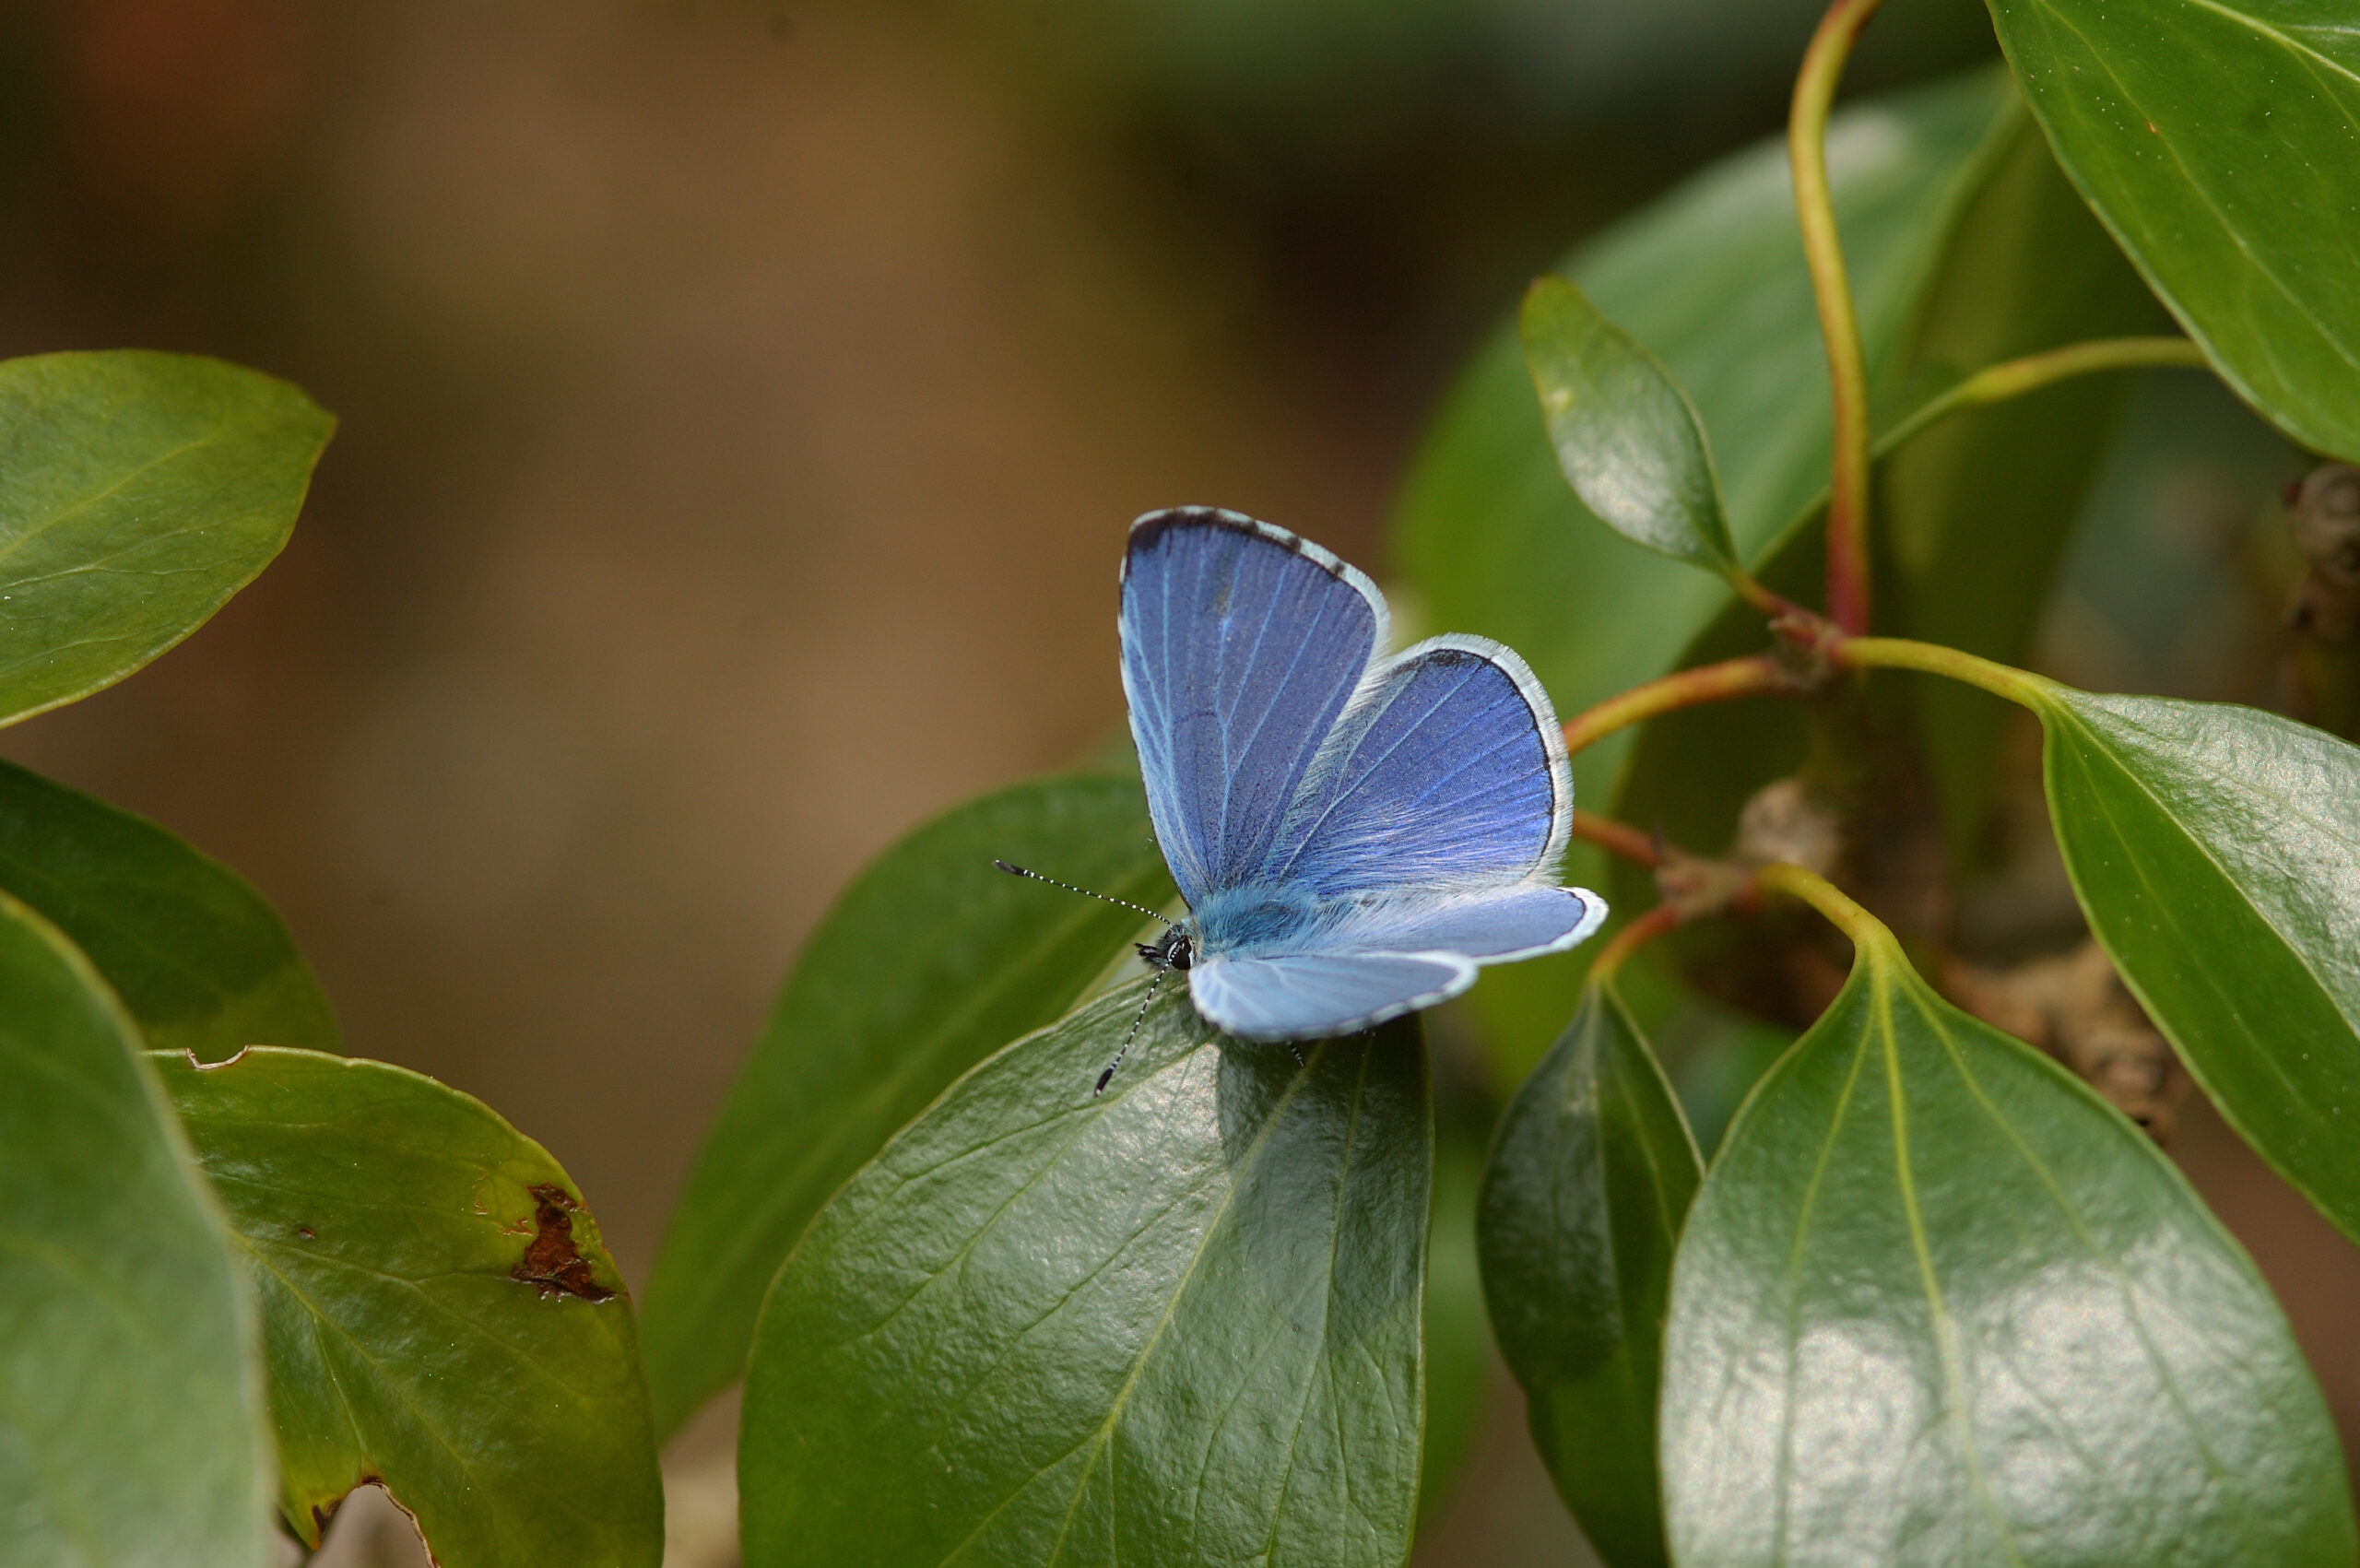 Huge citizen science project begins to track British butterflies